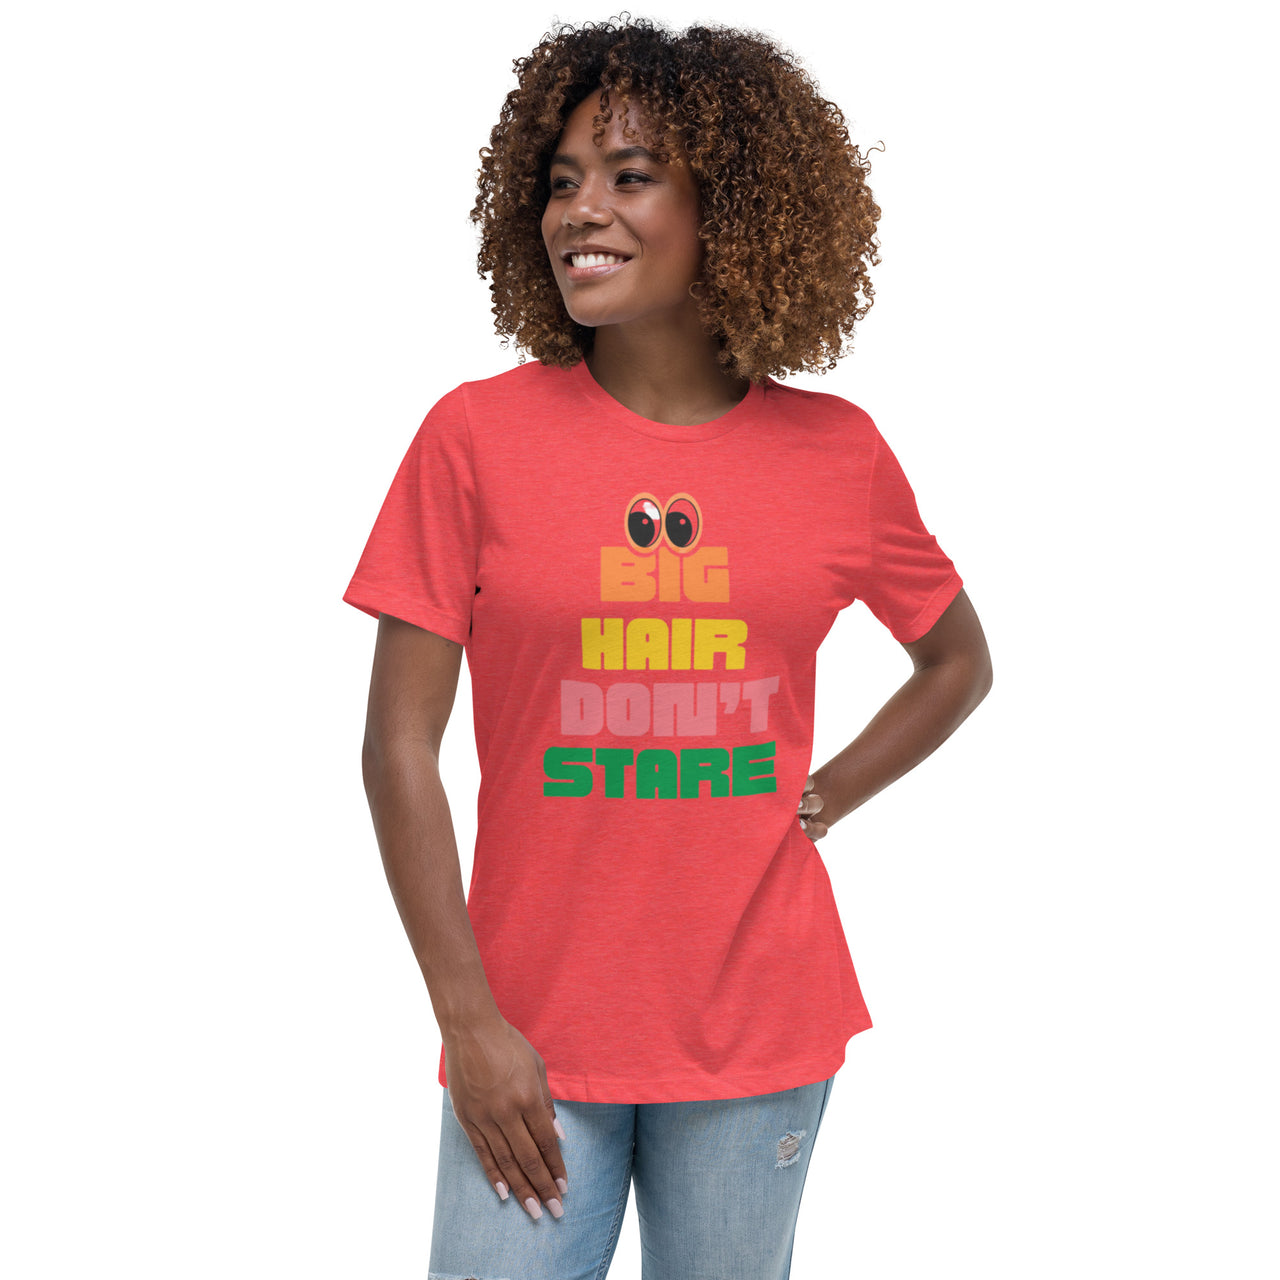 Big Hair Don't Stare! - T-Shirt